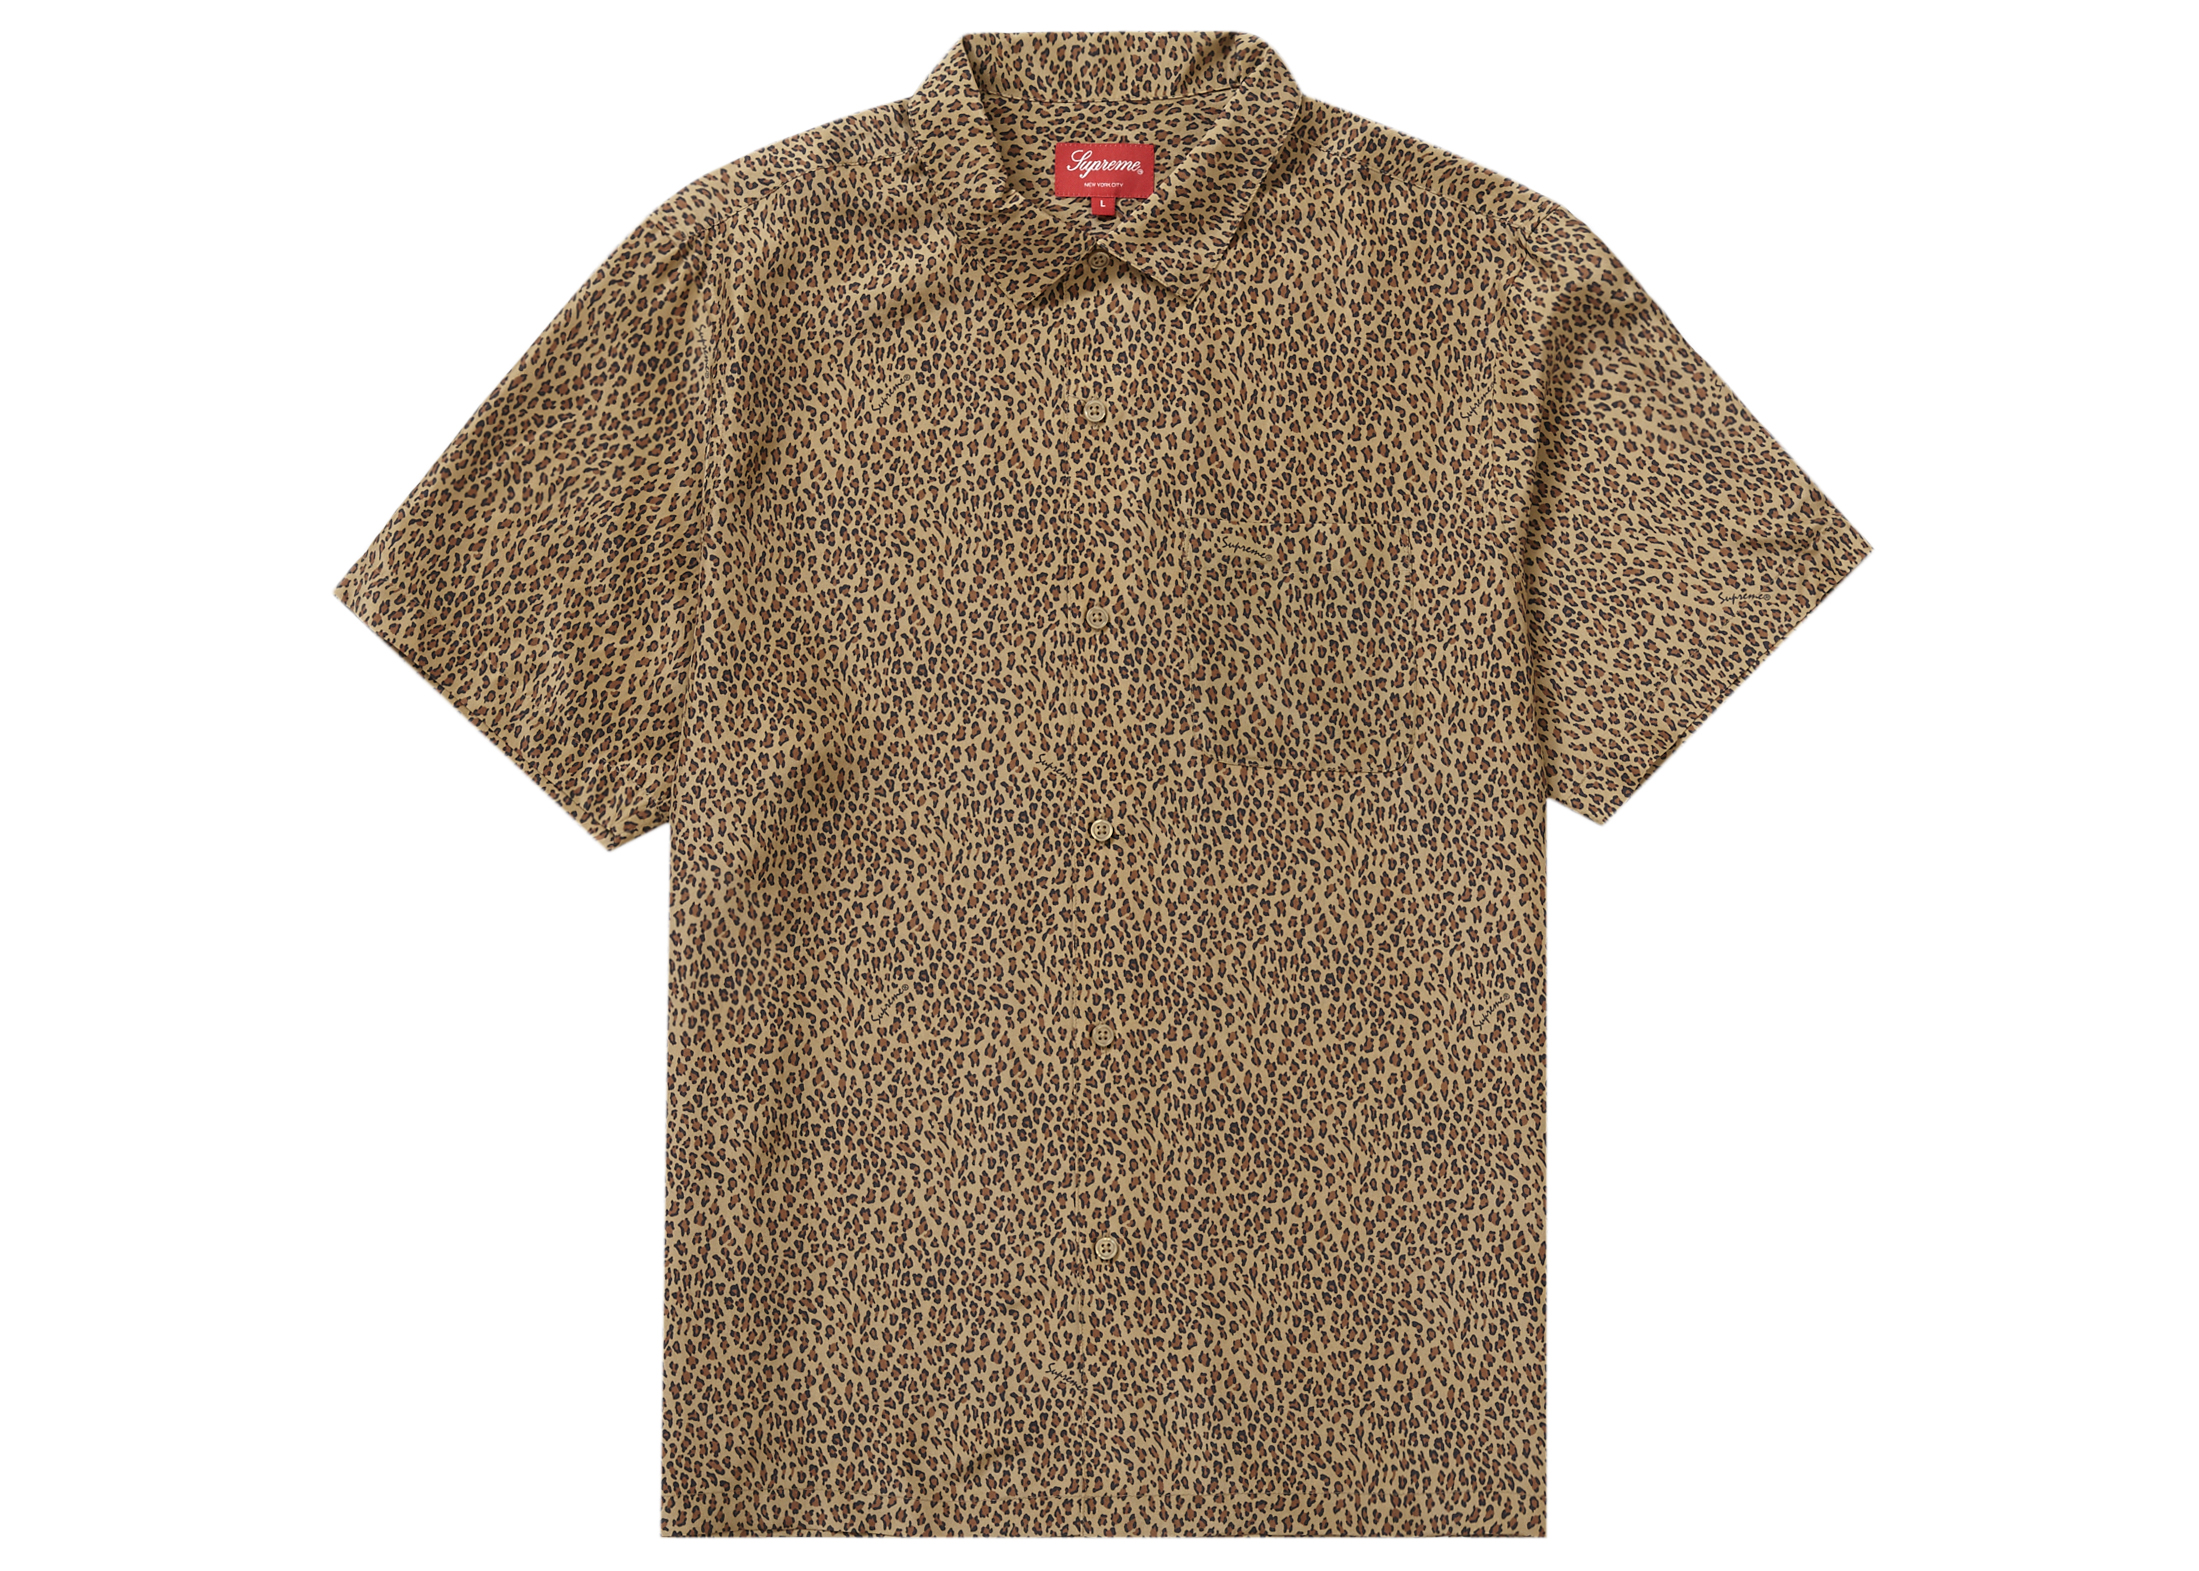 Supreme / Leopard Silk S/S Shirt